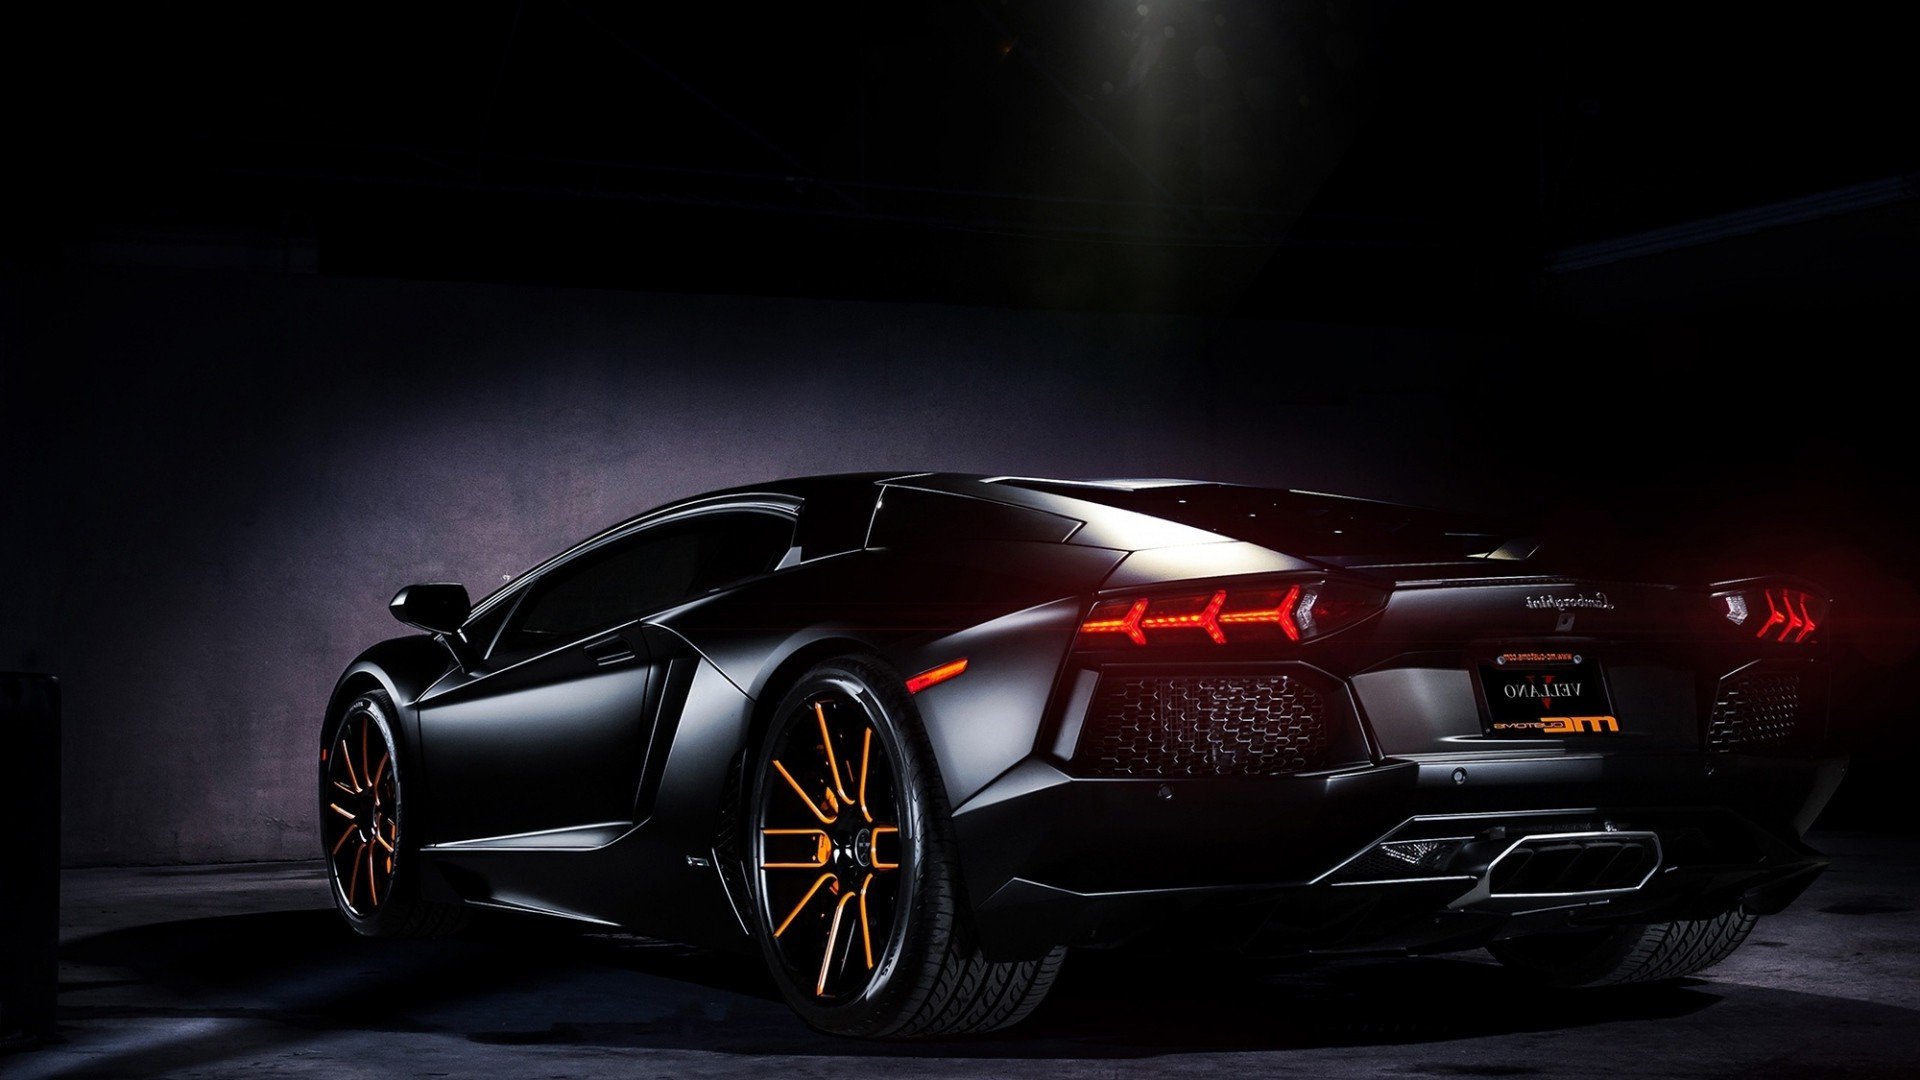 Free photo Black Lamborghini with gold rims